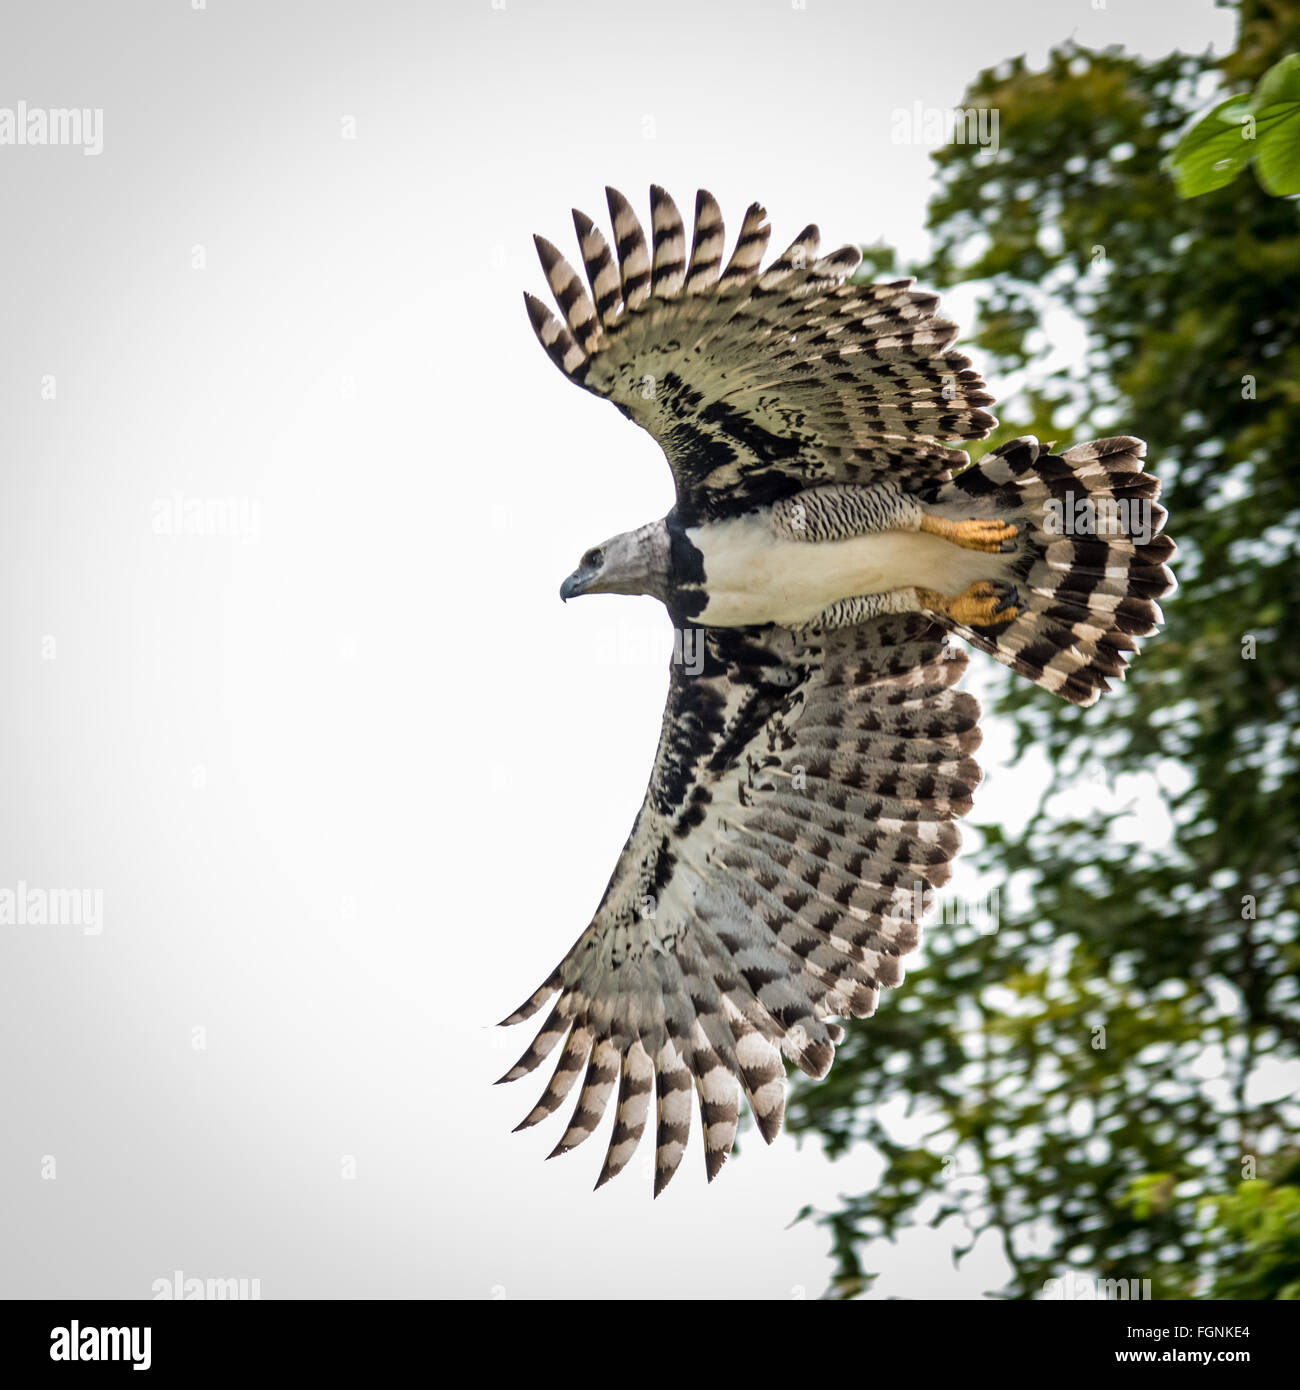 https://c8.alamy.com/comp/FGNKE4/harpy-eagle-harpia-harpyja-in-flight-FGNKE4.jpg